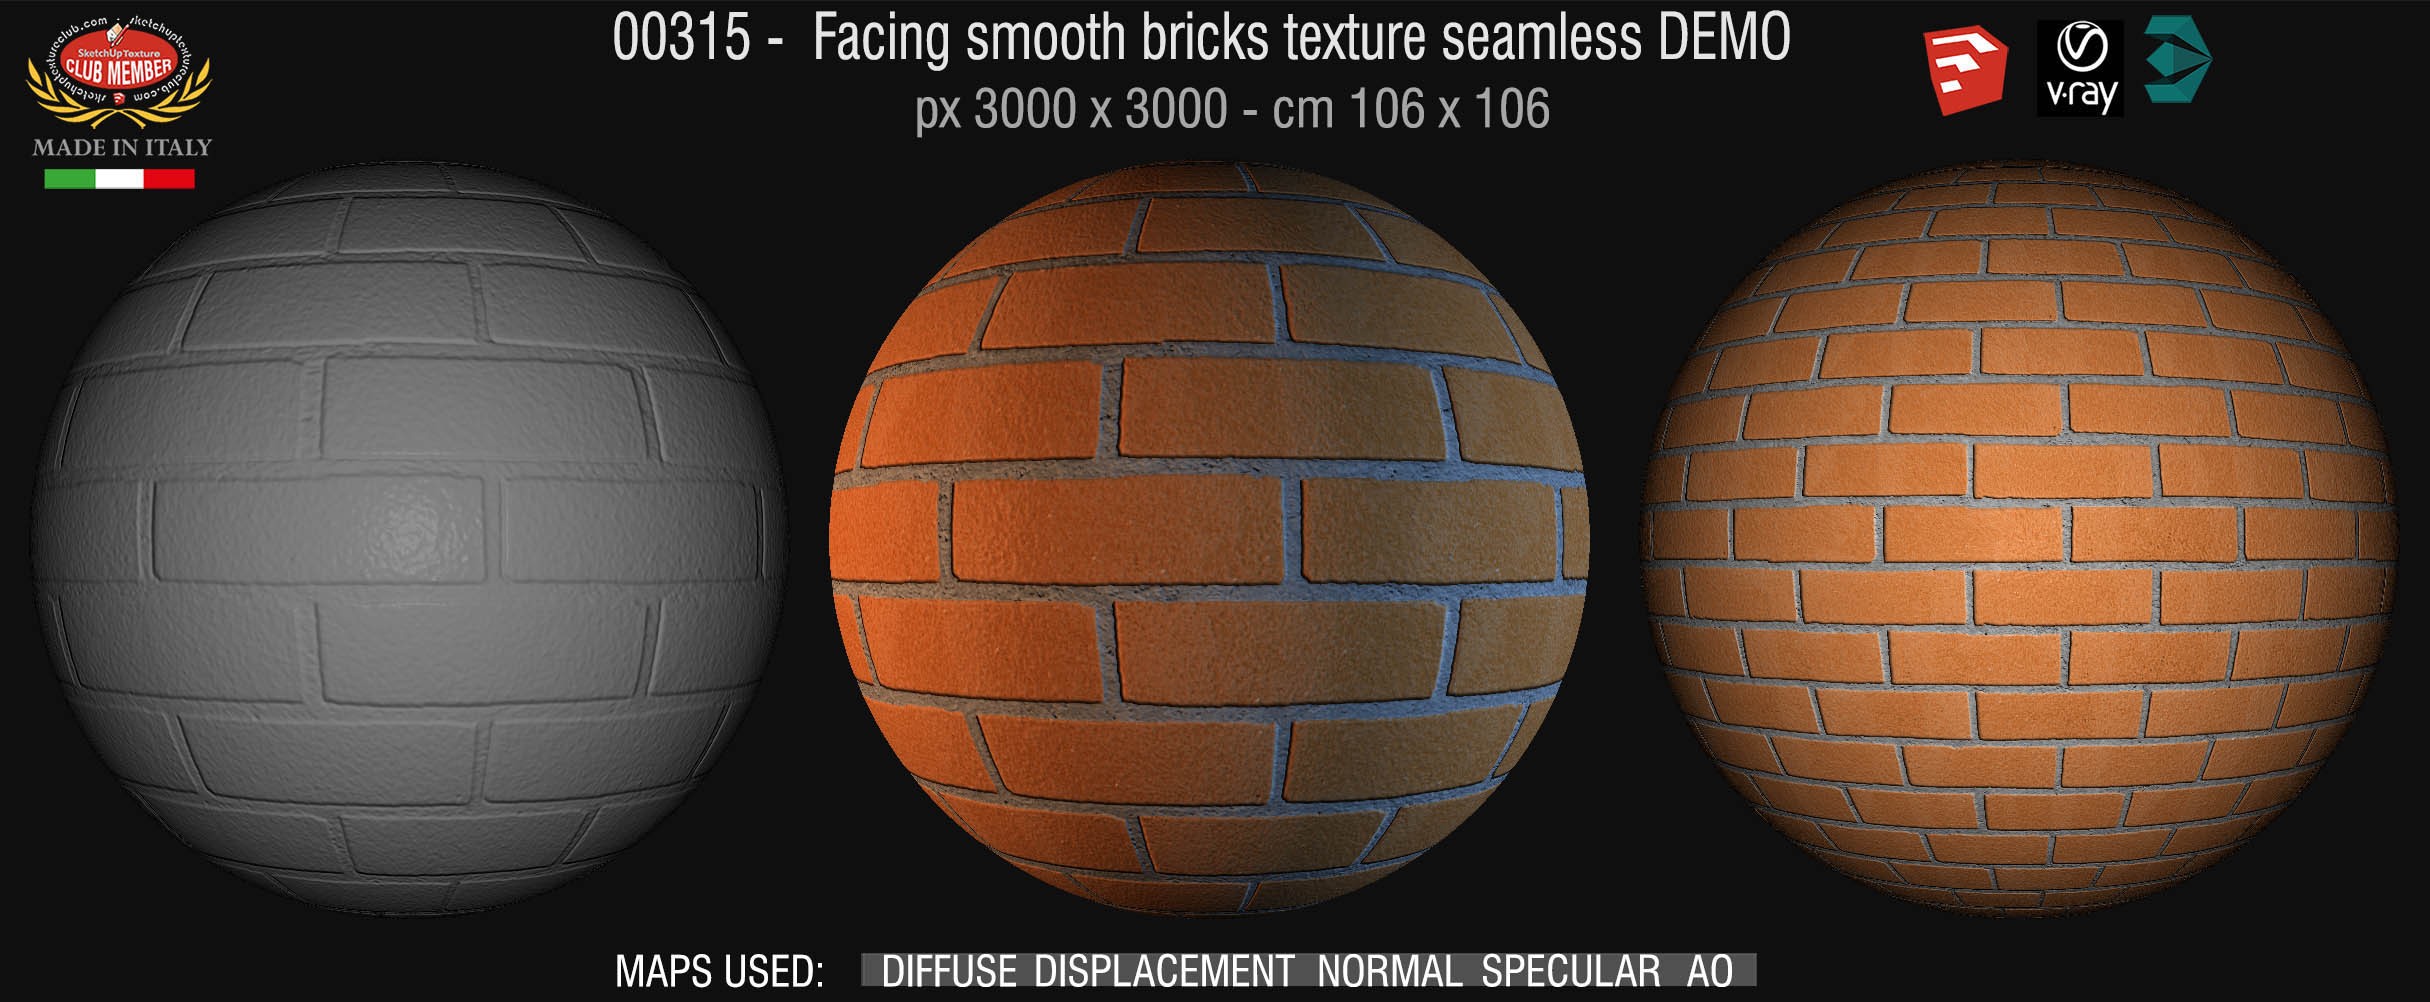 00315 Facing smooth bricks texture seamless + maps DEMO